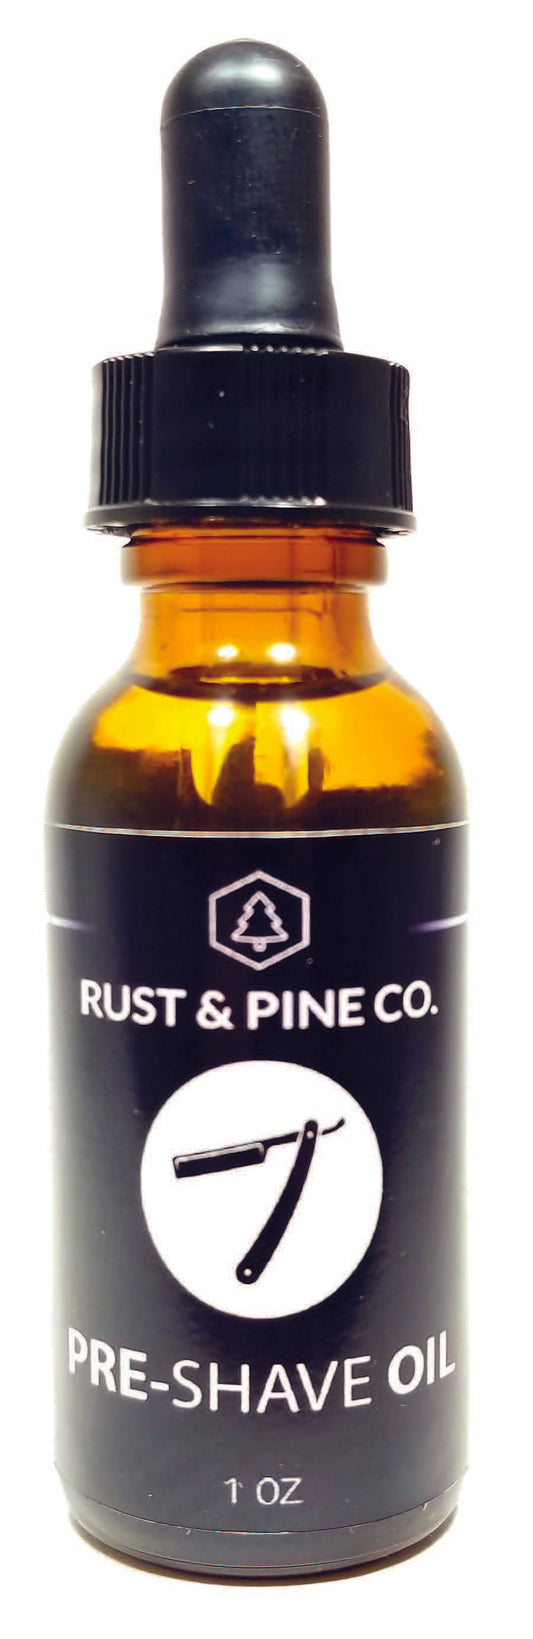 Huile Rust & Pine de pré-rasage